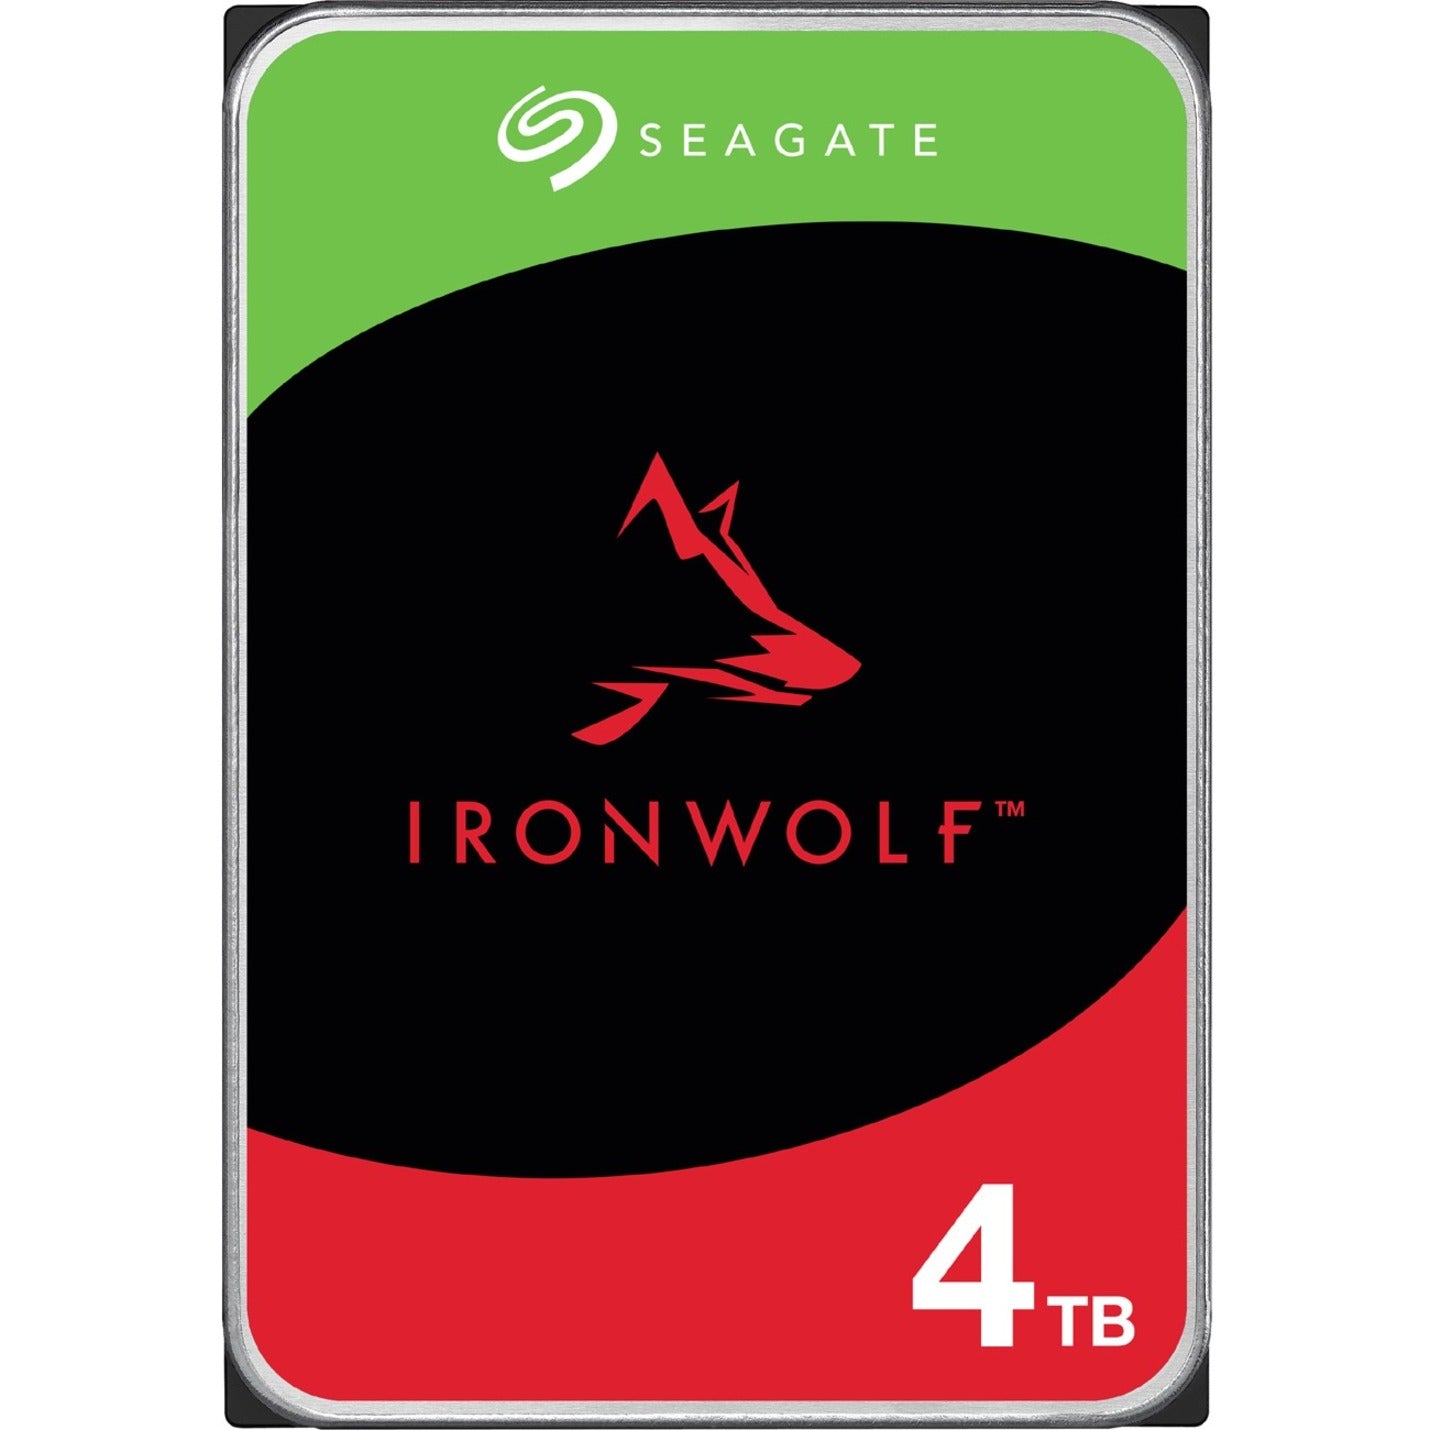 Seagate ST4000VN006 IronWolf 4TB NAS Hard Drive, 3.5", 6Gb/s SATA, 64MB Buffer